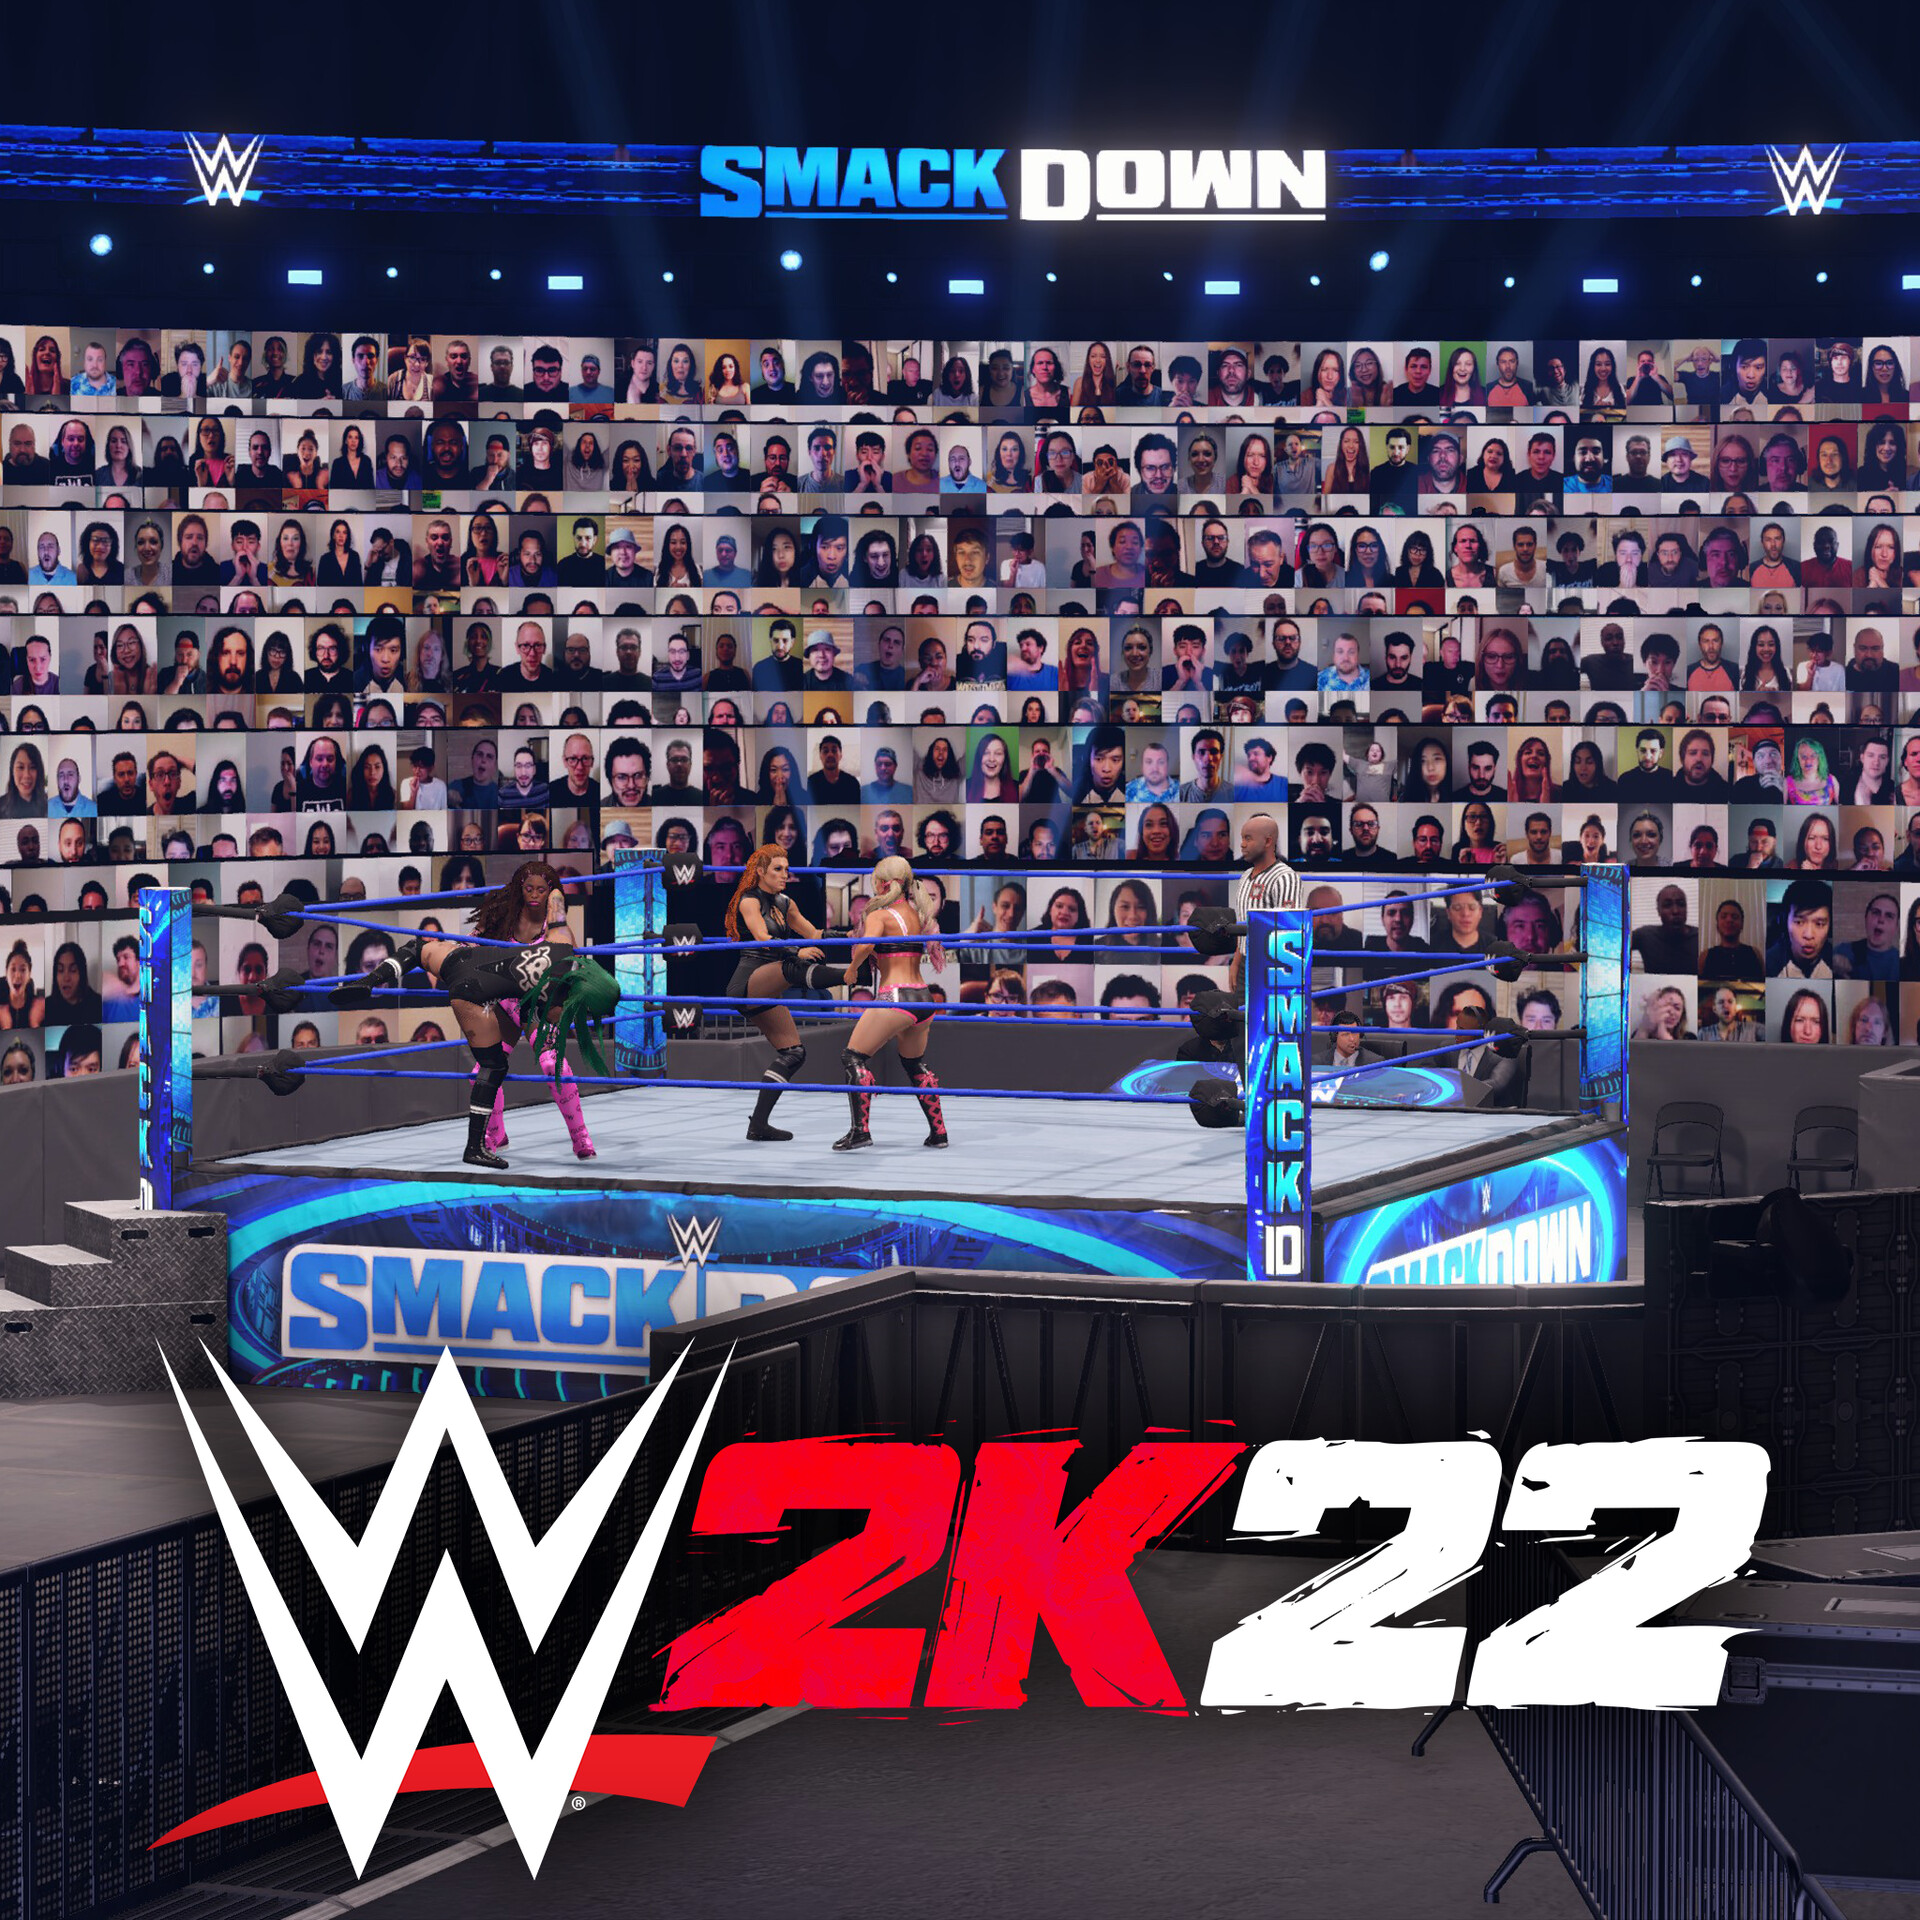 ArtStation - WWE 2K22: Thunderdome Virtual Crowd